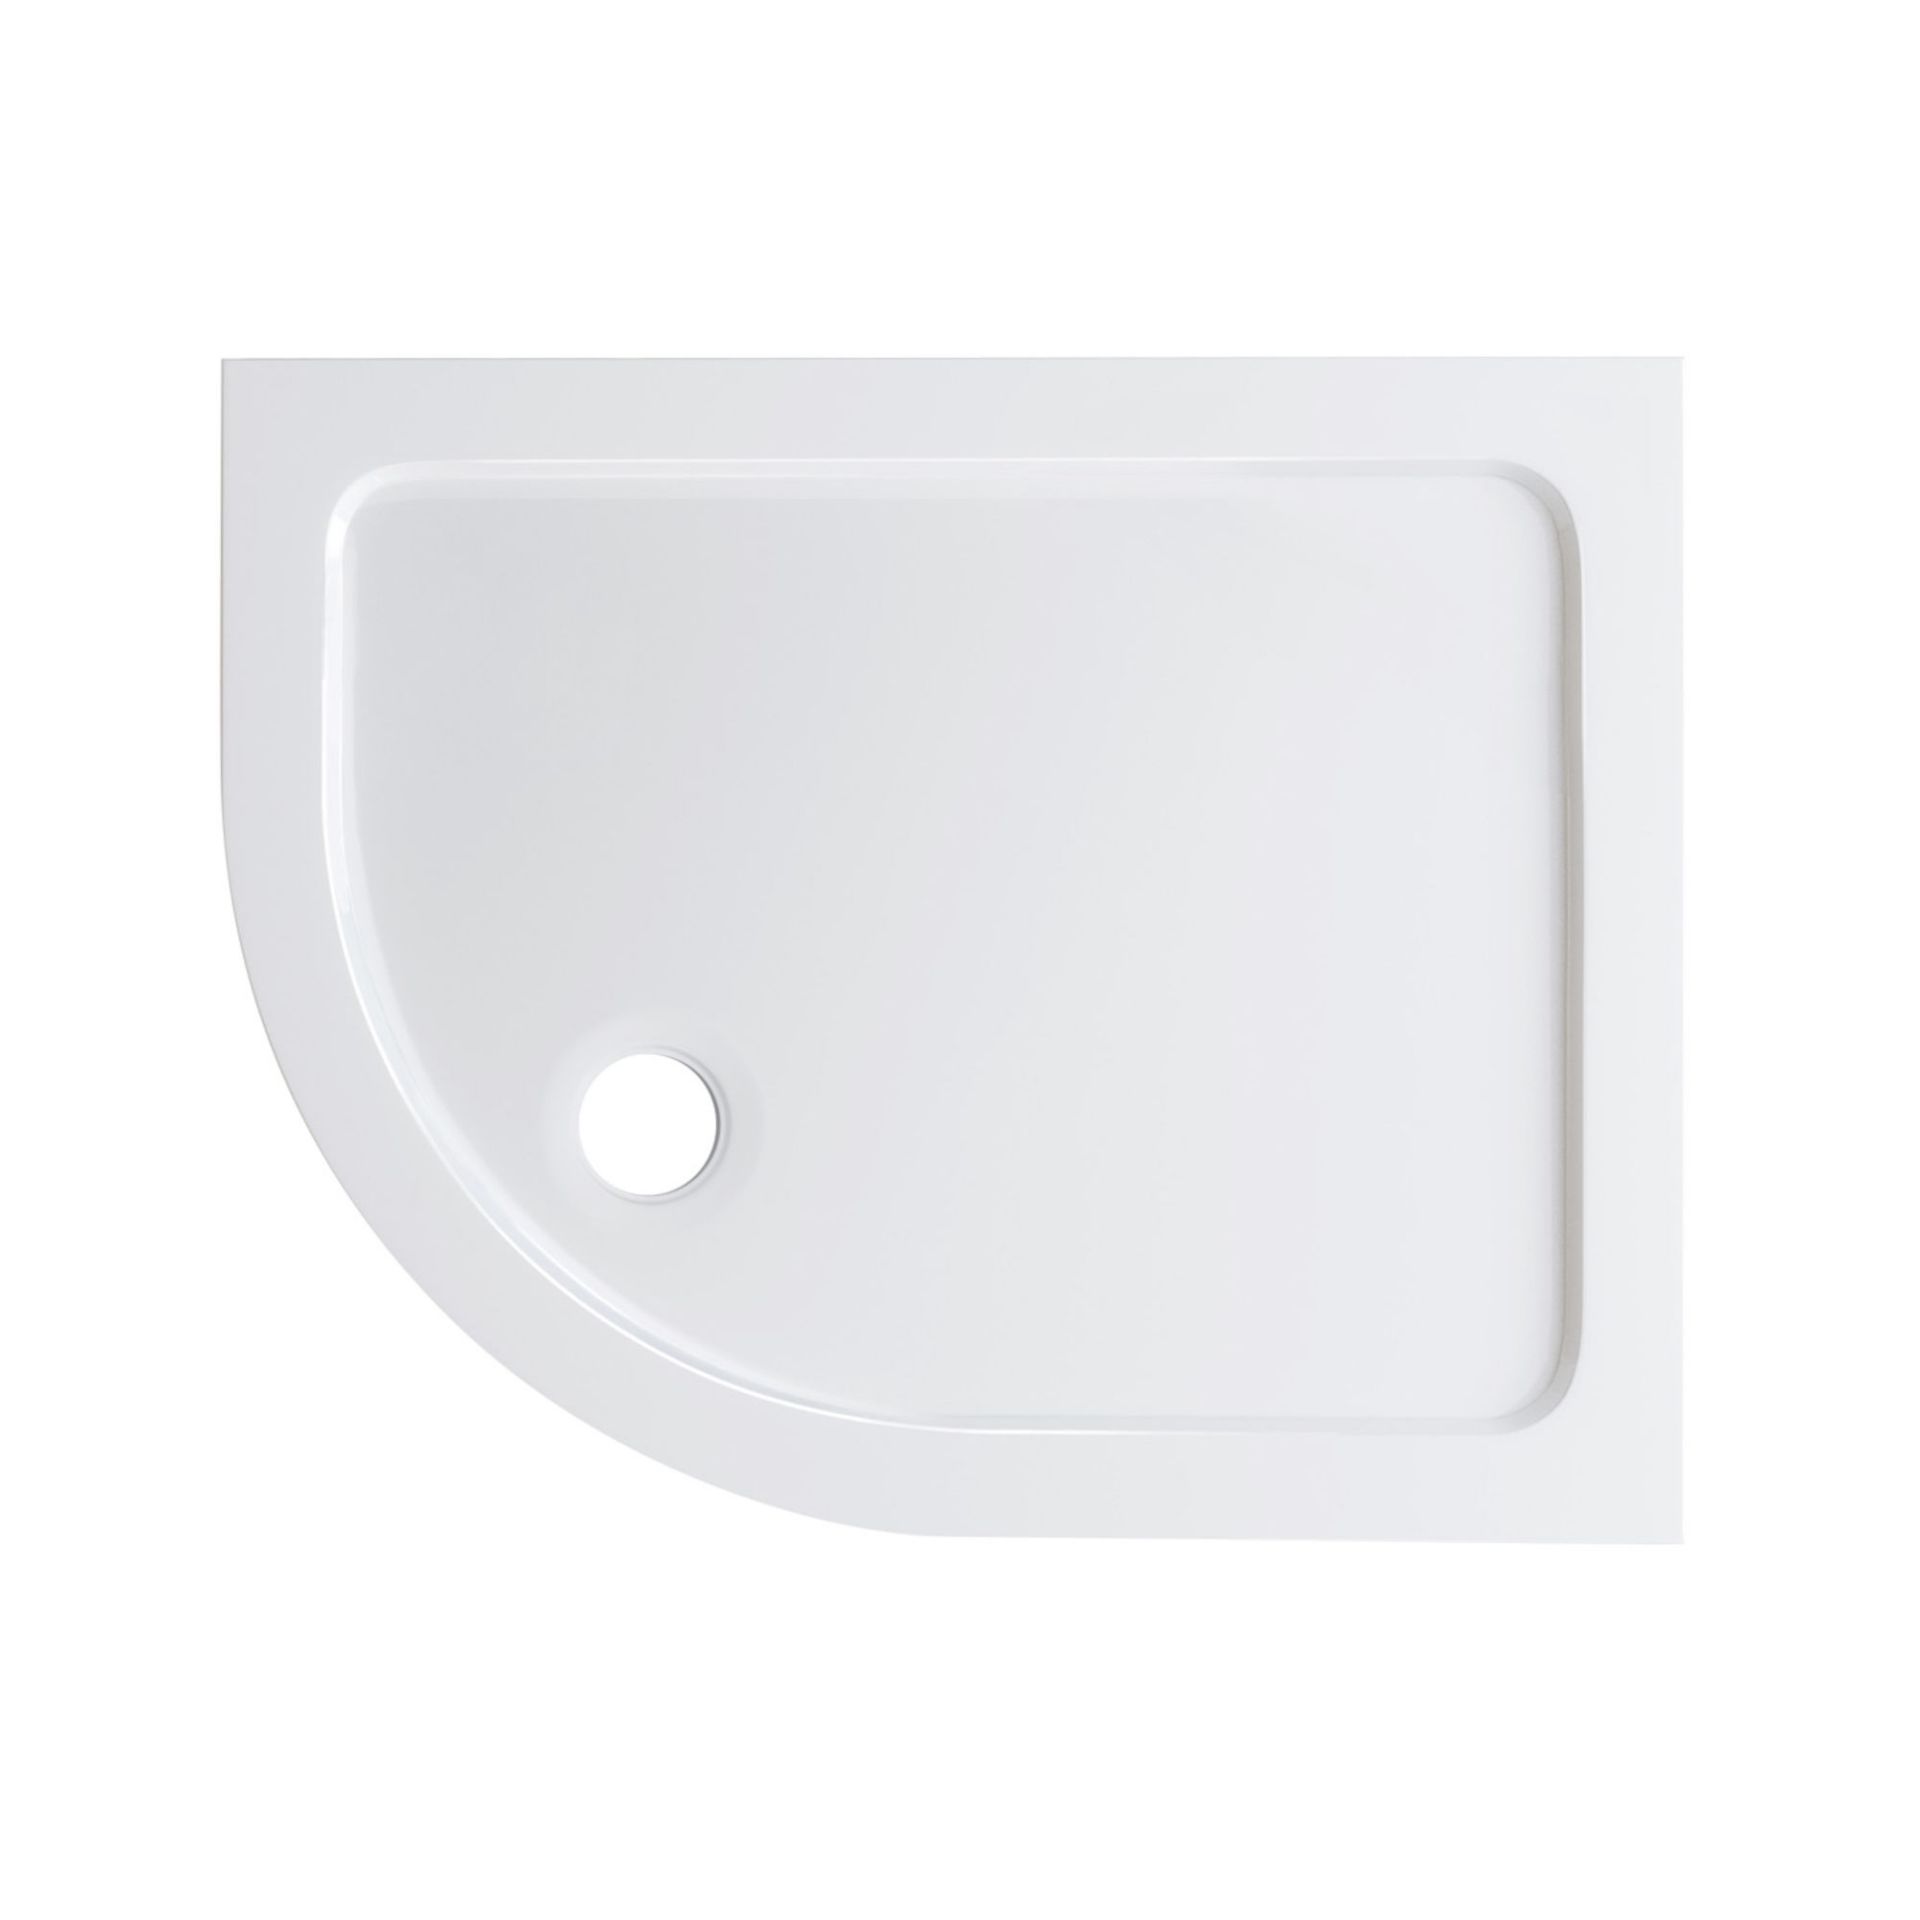 (SP236) 1000x900mm Offset Quadrant Ultra Slim Stone Shower Tray - Left. Low profile ultra slim